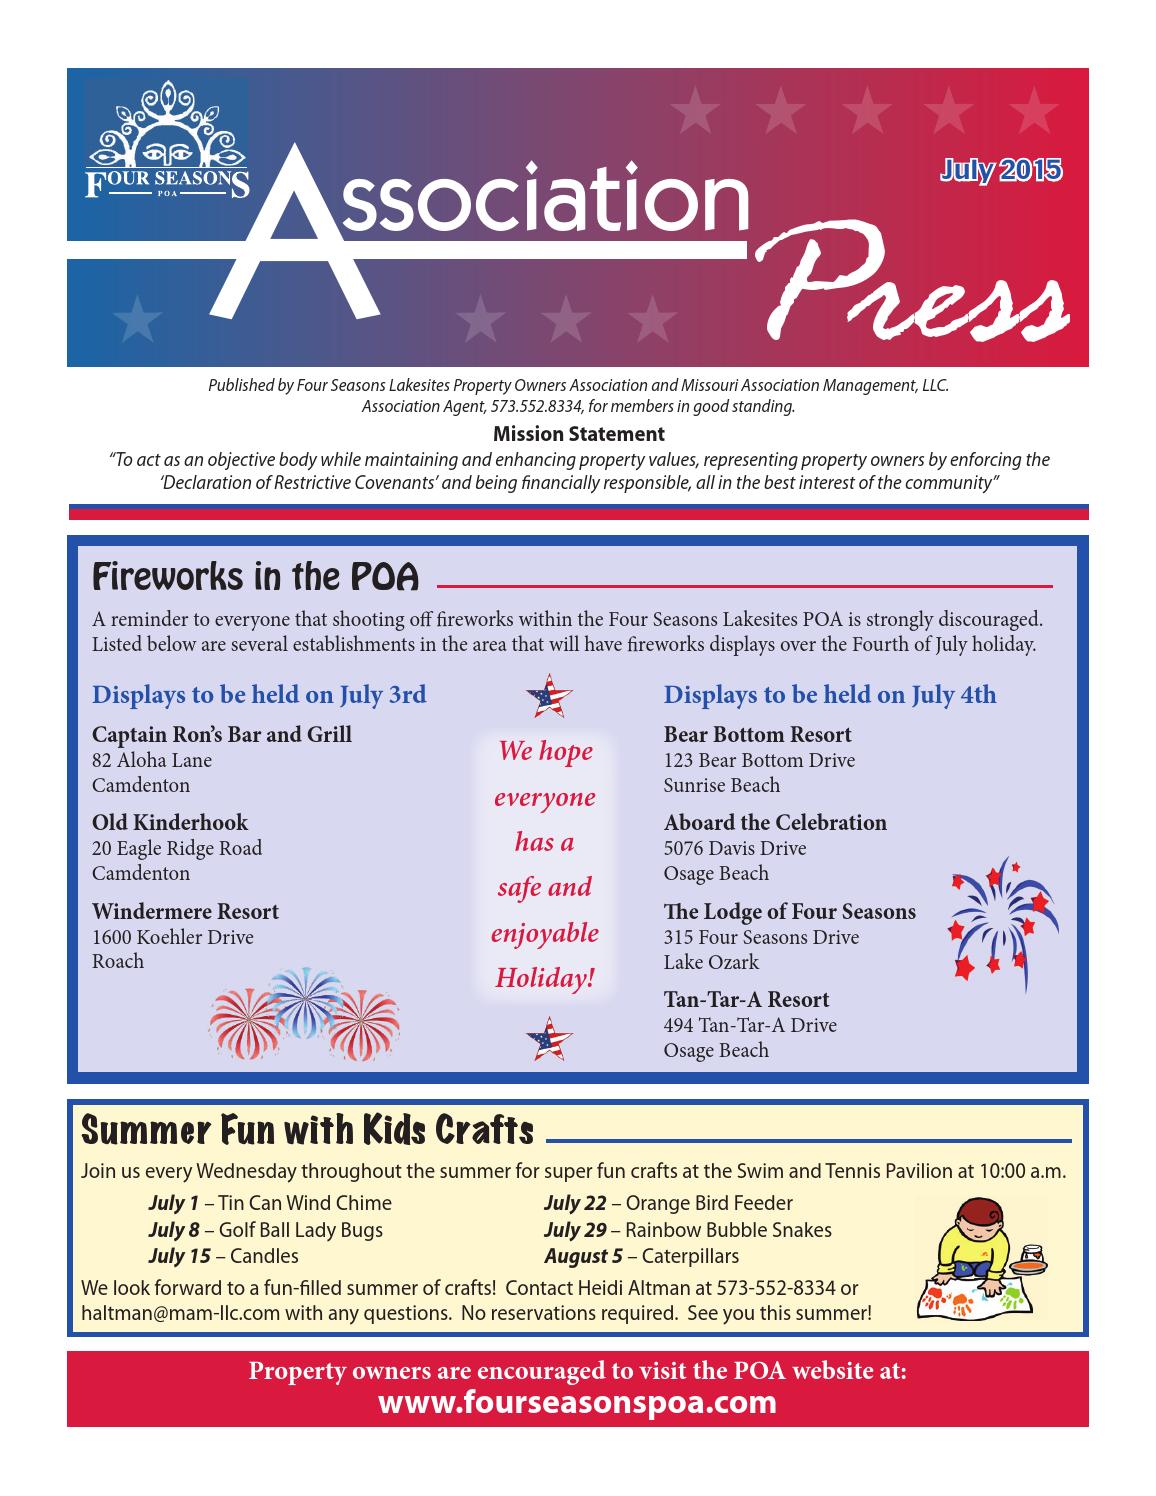 July 2015 Association Press By Four Seasons Poa Issuu